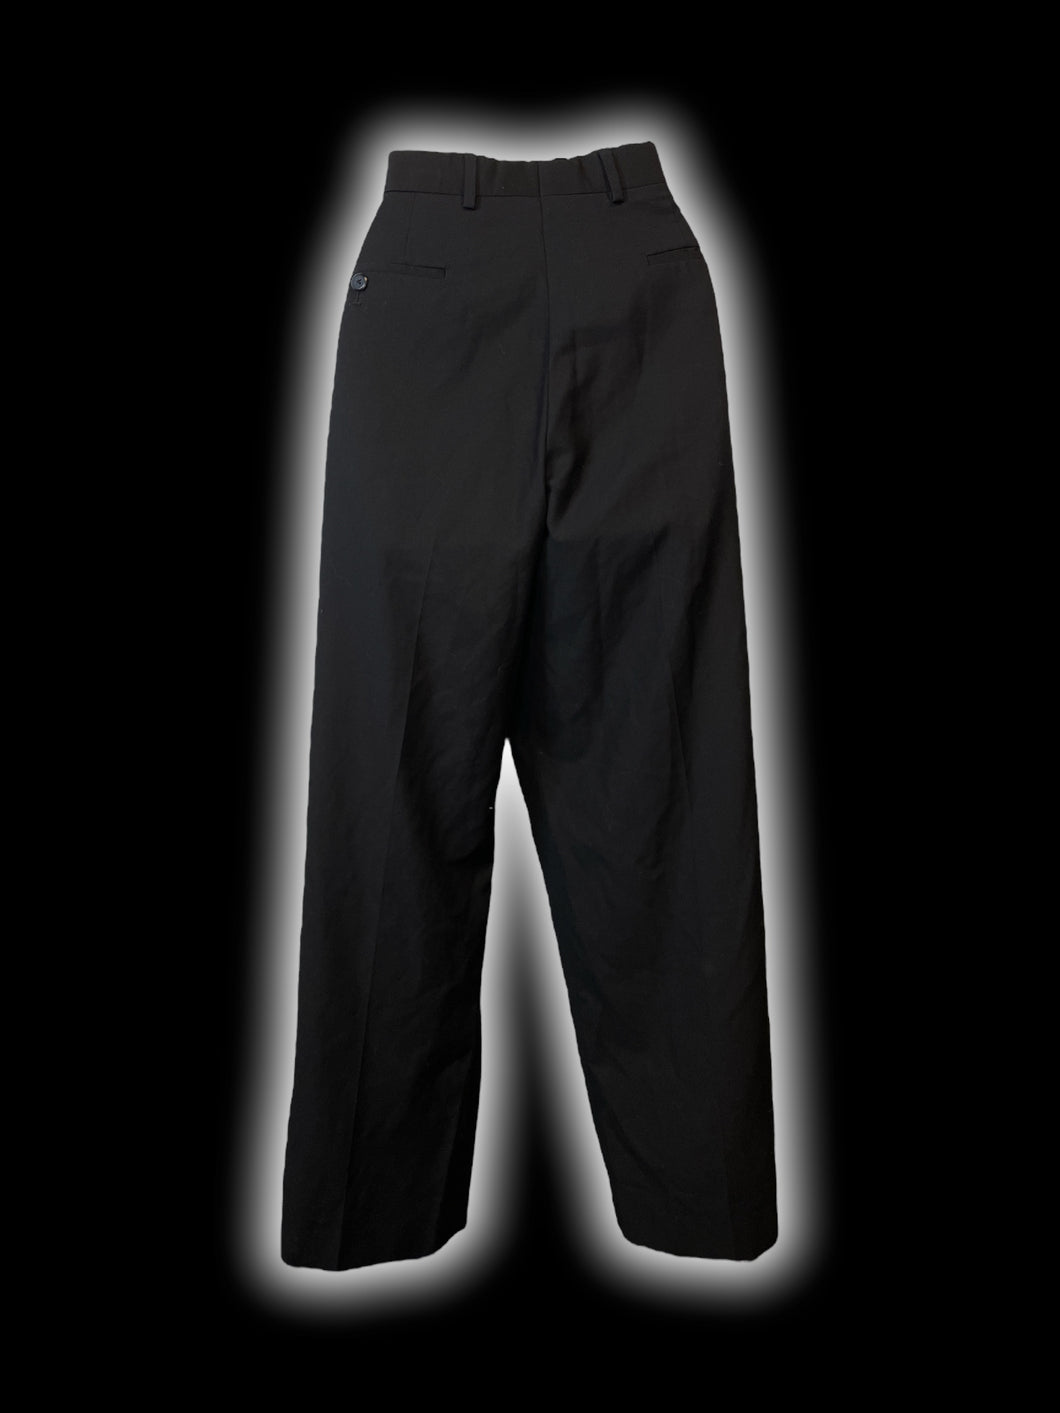 L Black high waist straight leg pants w/ pockets, belt loops, & clasp/button/zipper closure